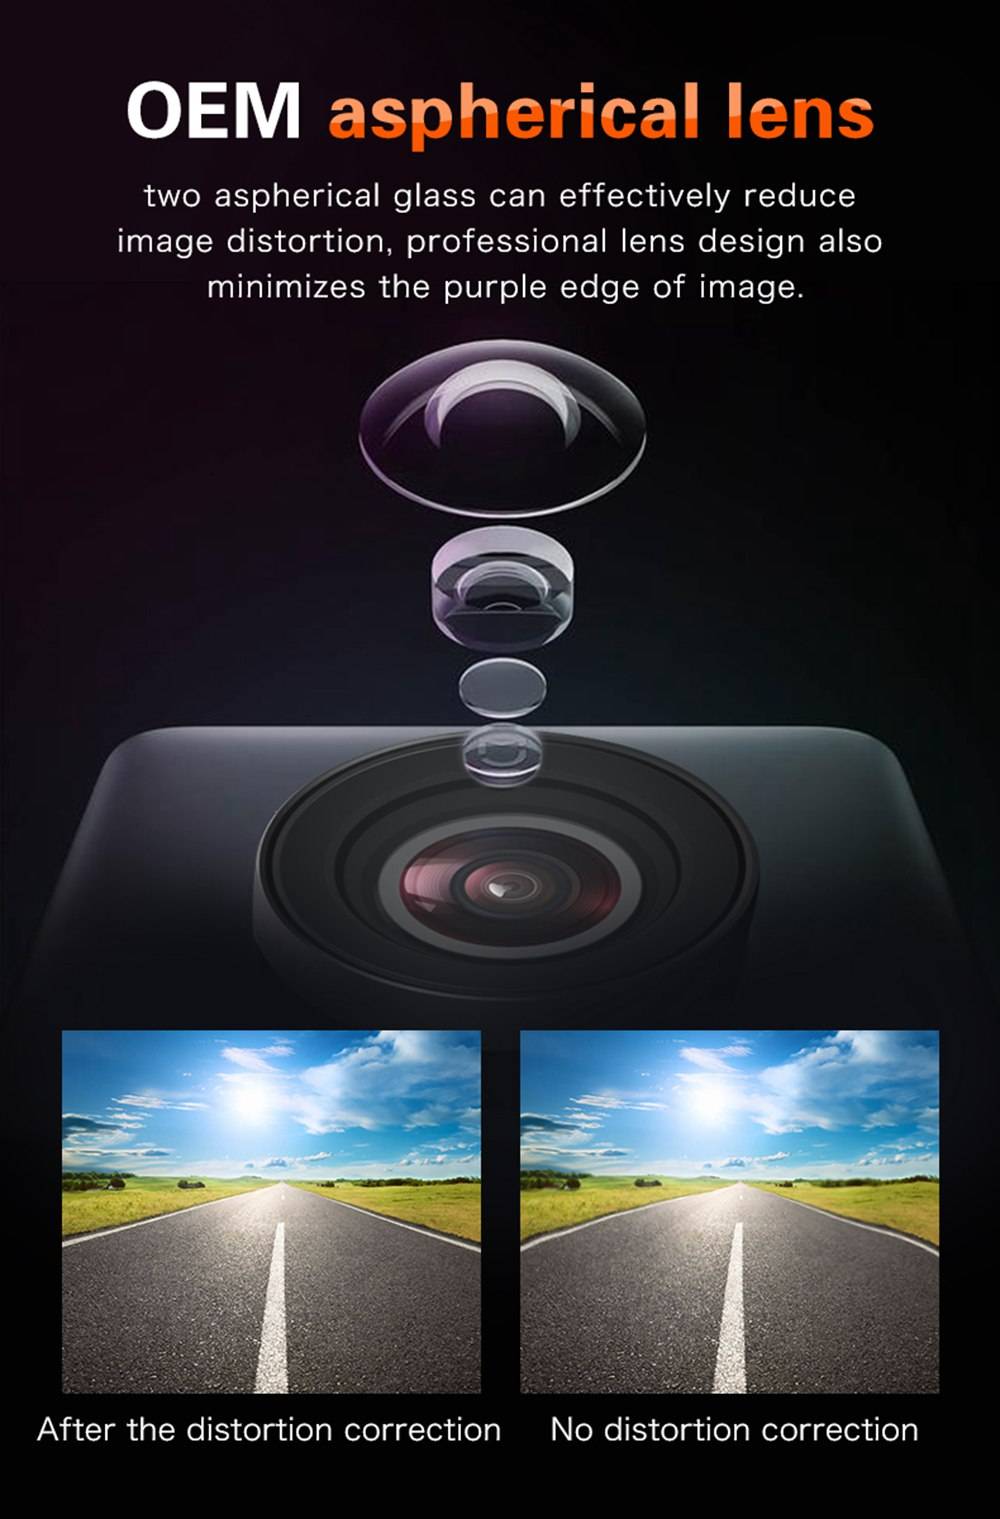 Hawkeye Firefly X 4K/60fps 2.35 Inch IPS Touch Screen Ambarella H22 7X Digital Zoom WIFI FPV Action Sport Camera - Black